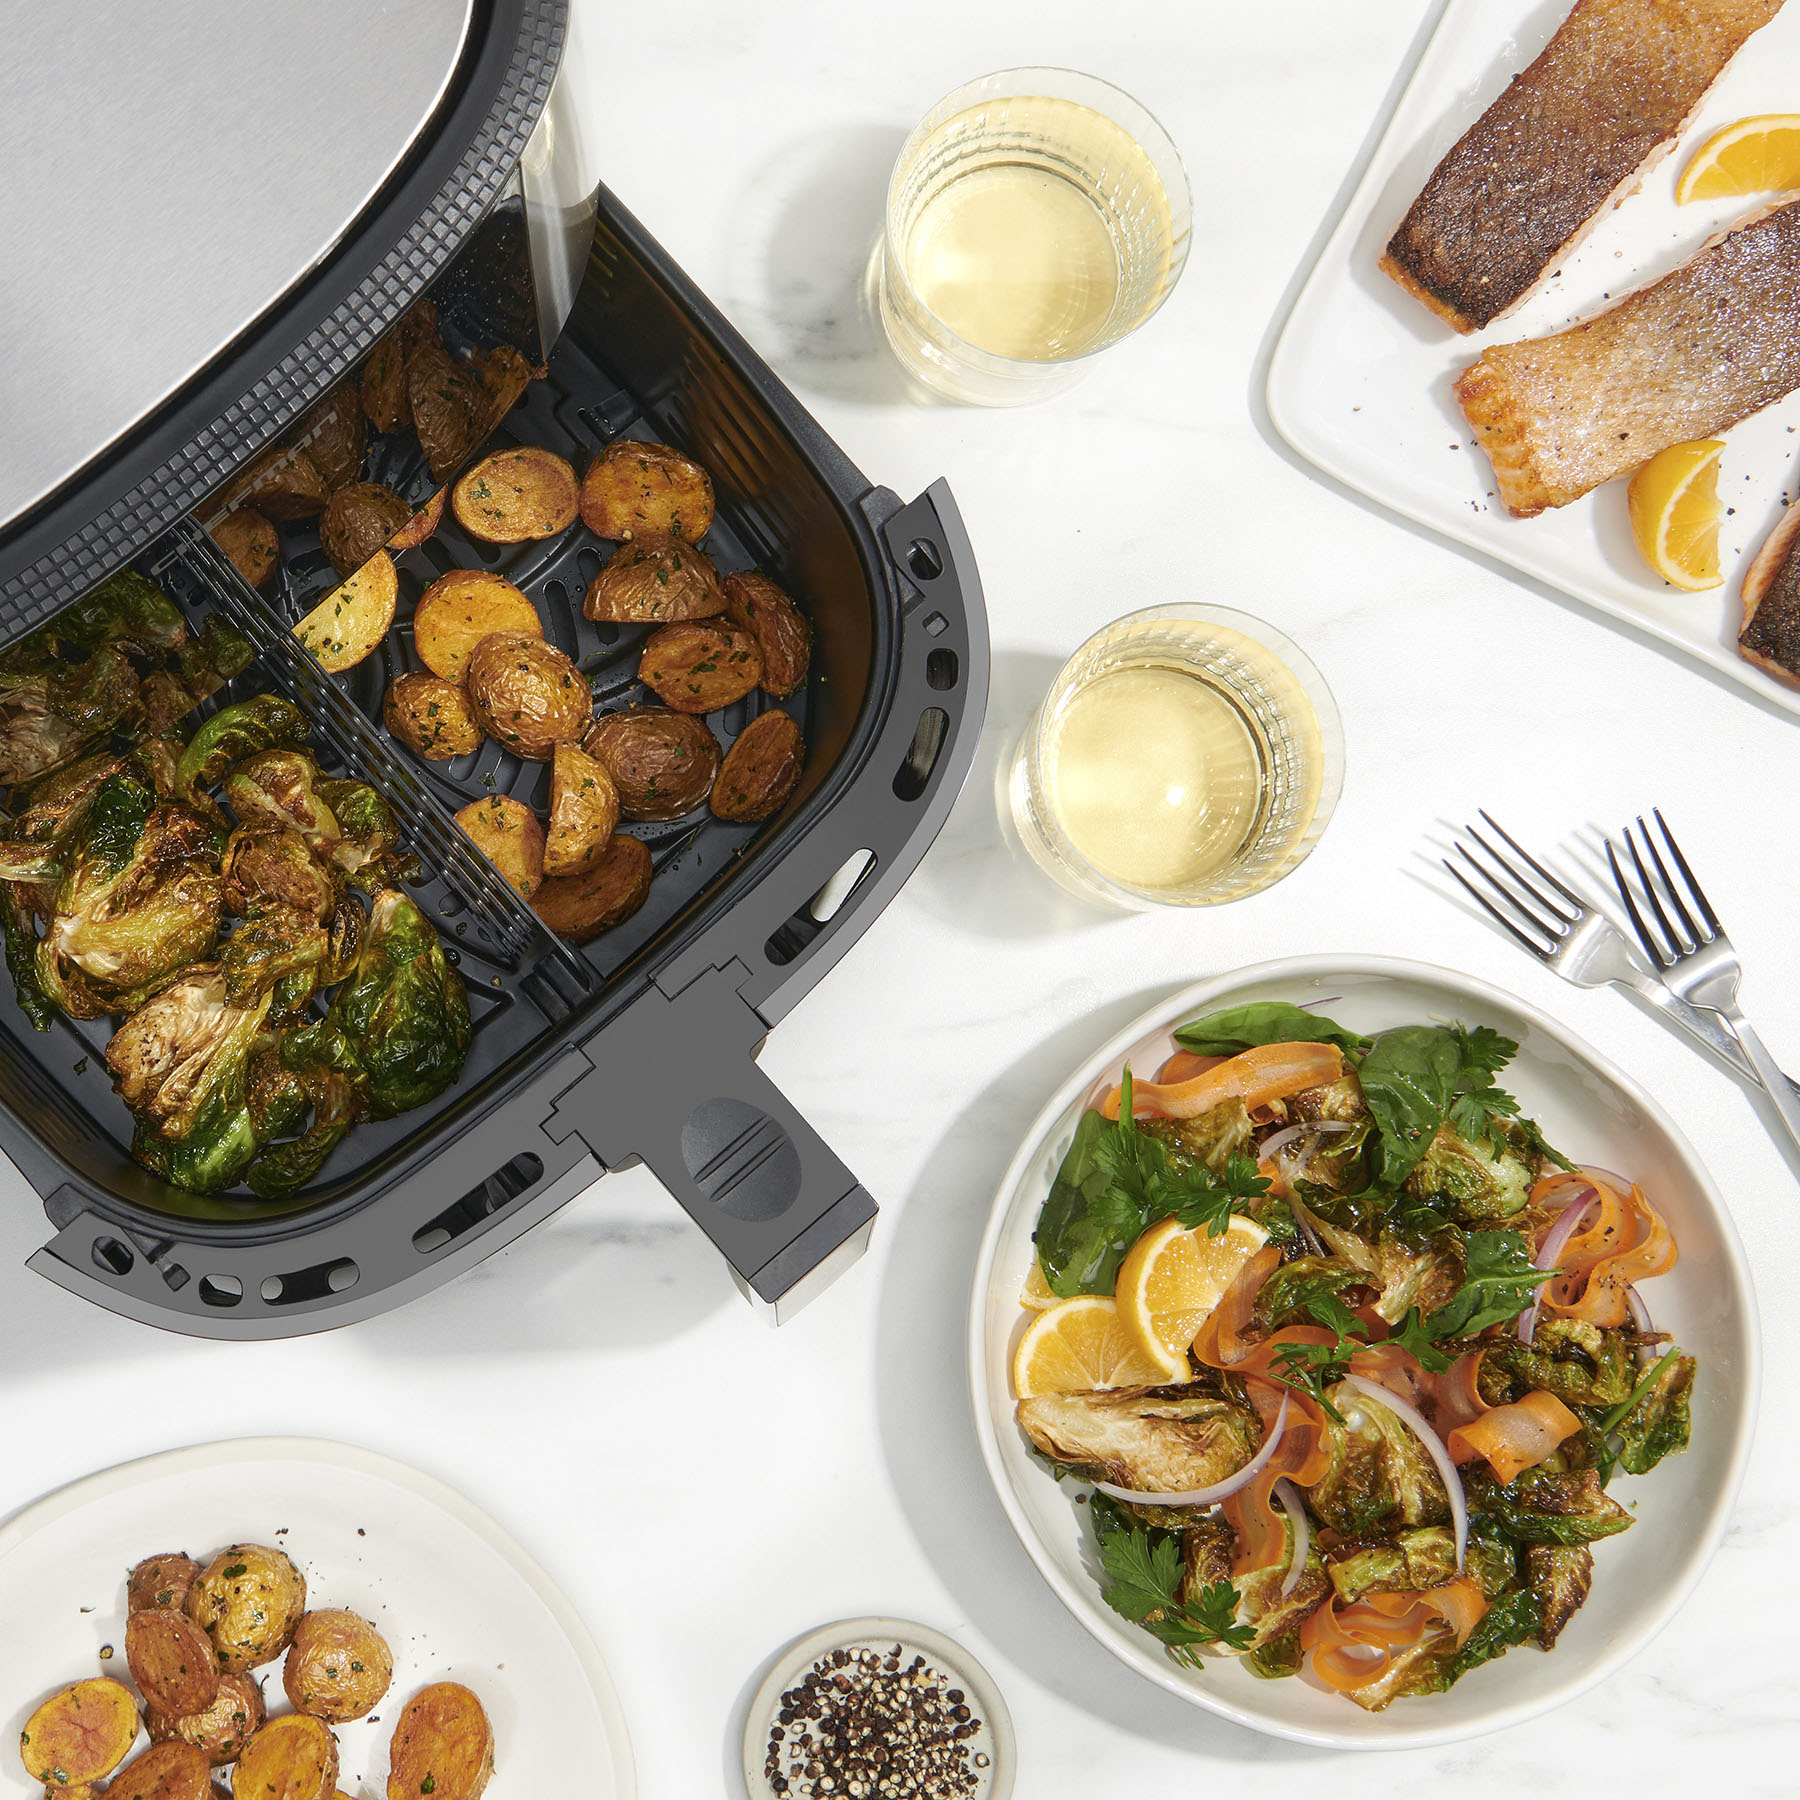 Chefman TurboFry Touch 8 Qt. Air Fryer w/ Advanced  - Best Buy